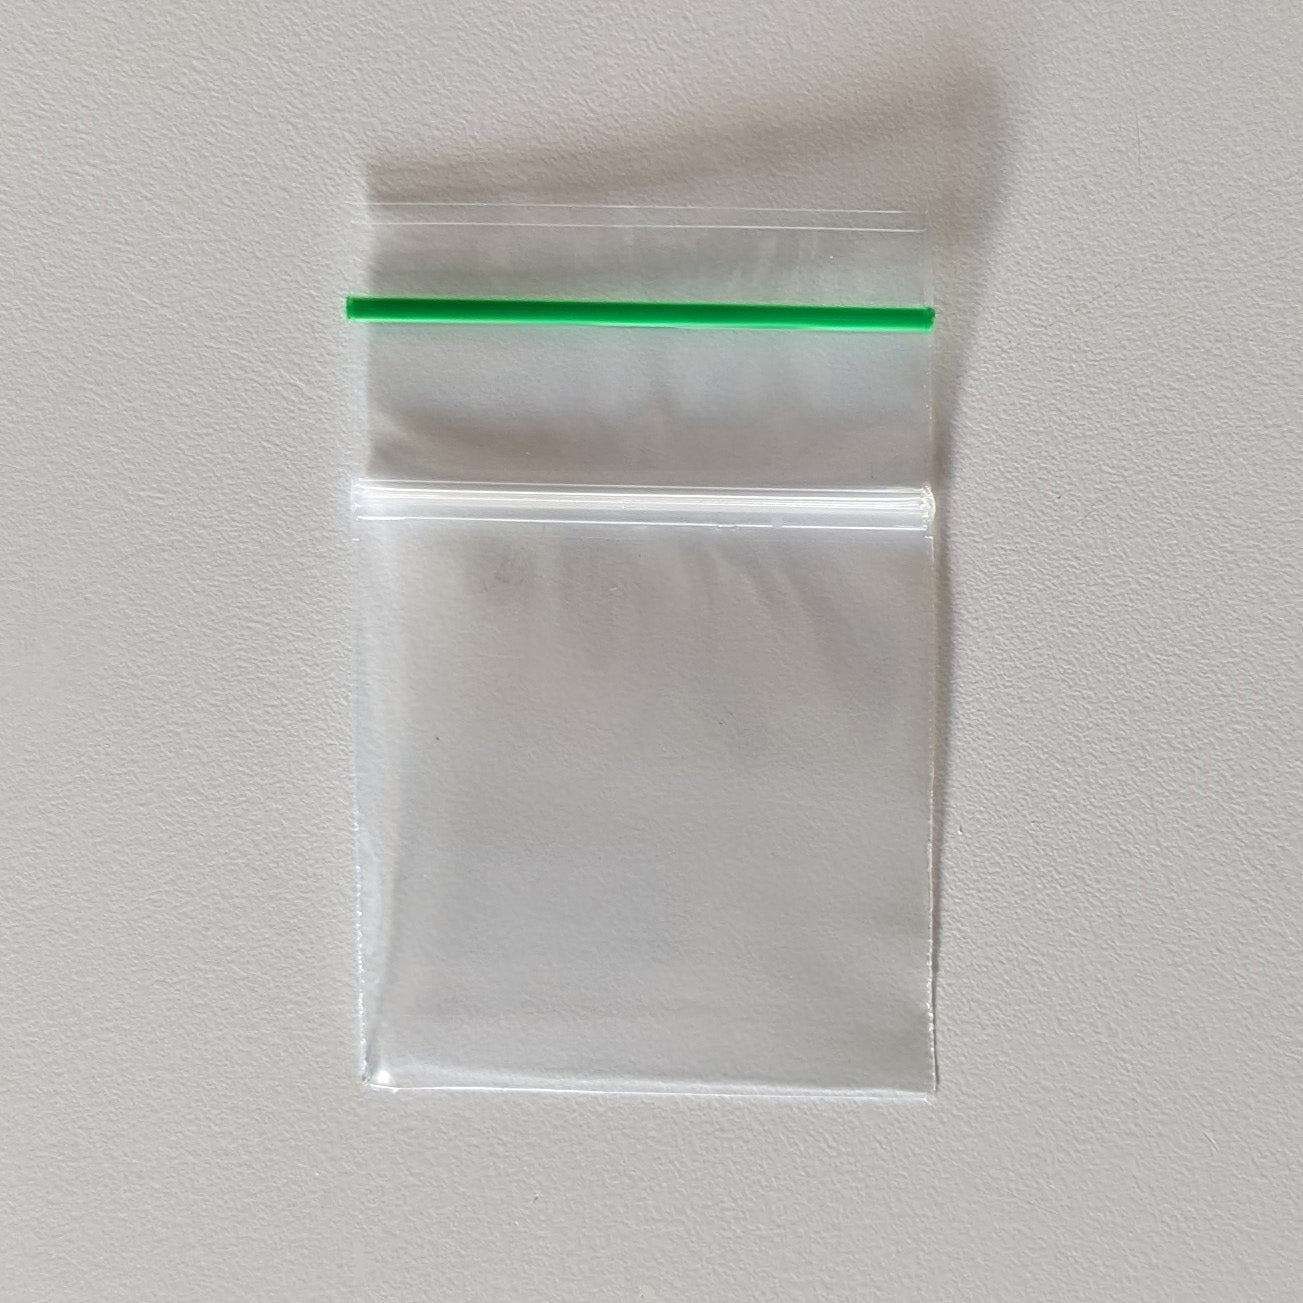 100 Pcs Plastic Zipper Bags, Clear Poly Bag, Resealable Zip Lock